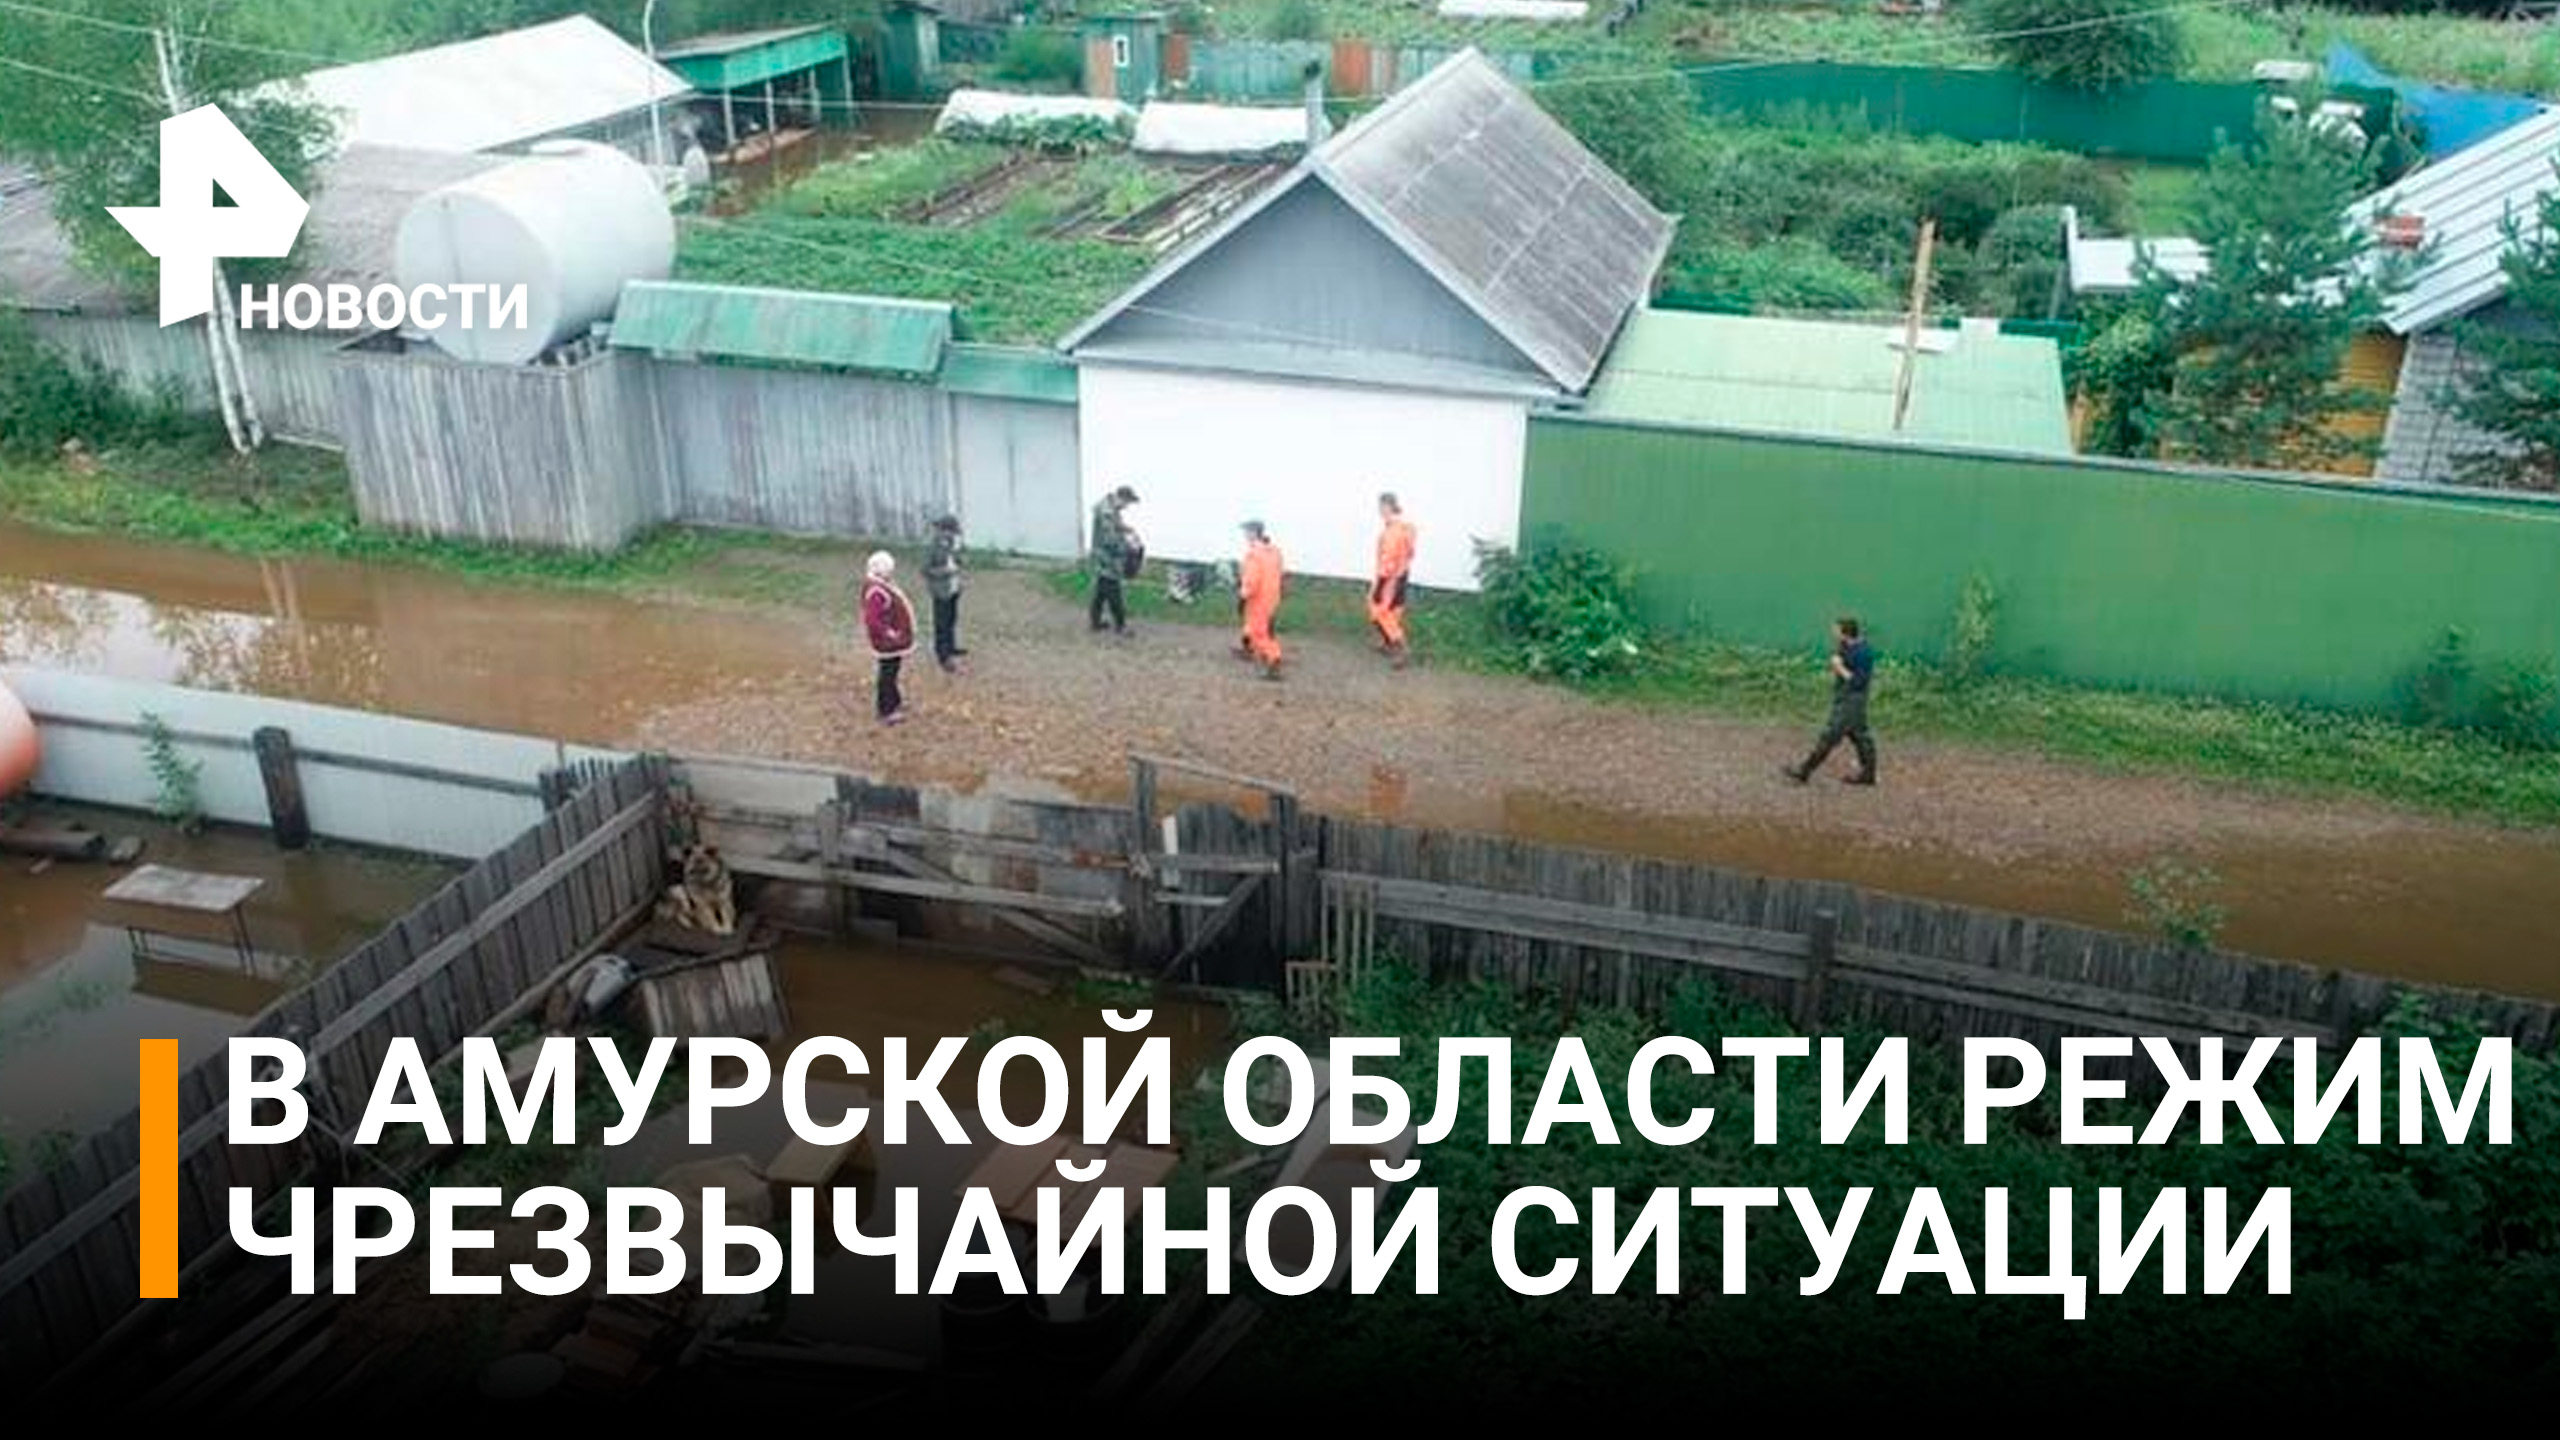 Режим чрезвычайной ситуации введен в Приамурье из-за паводка / РЕН Новости